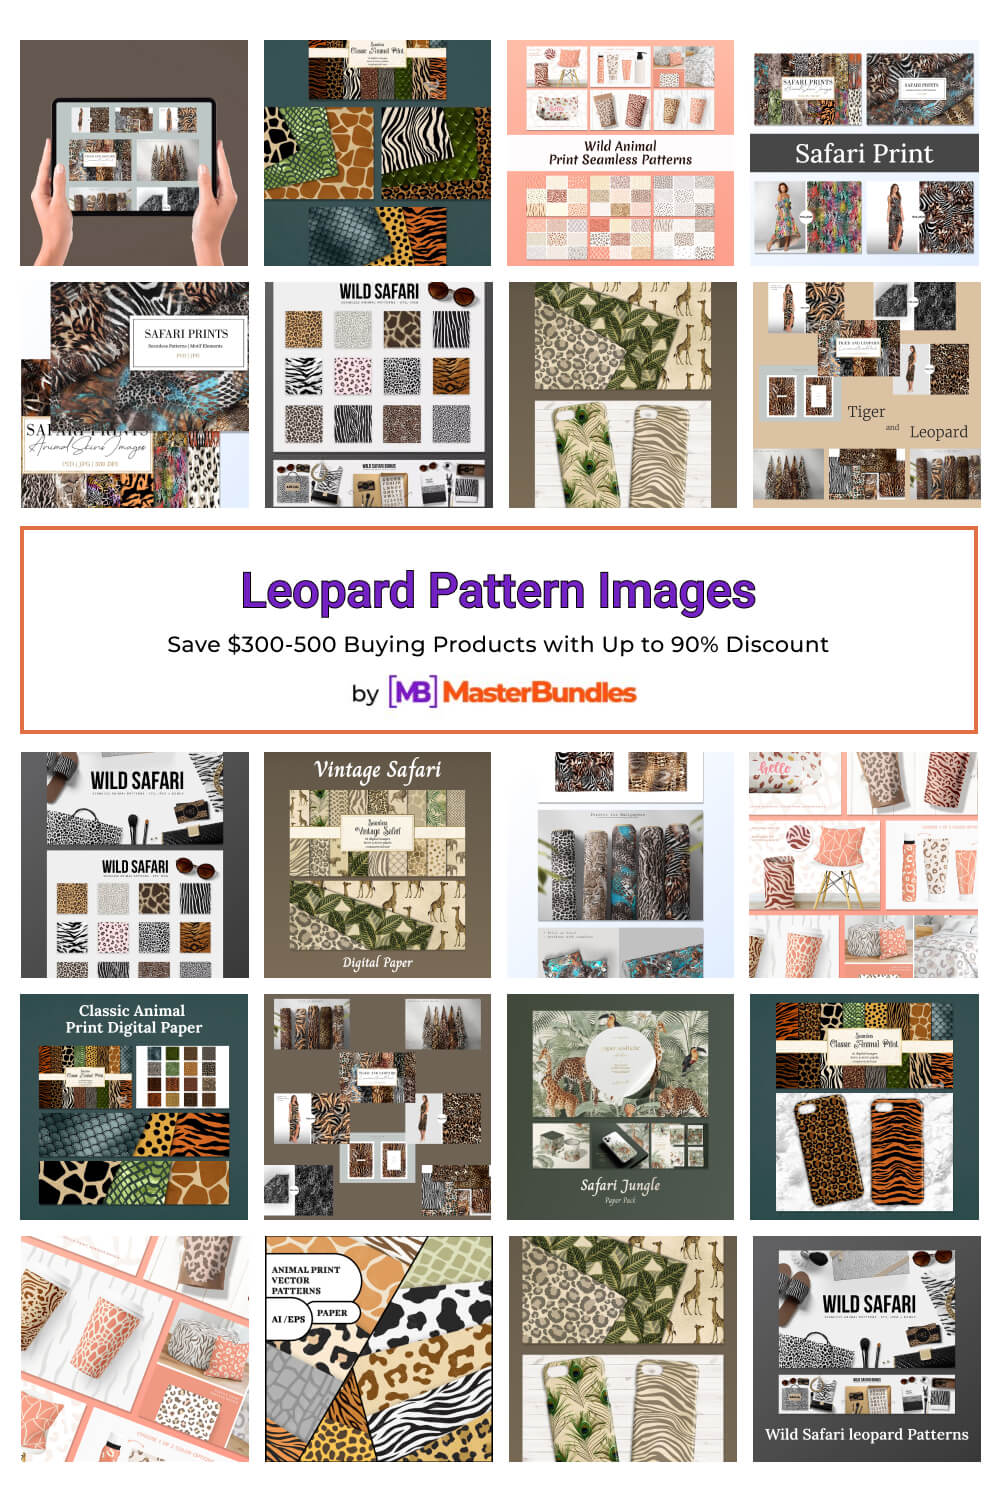 leopard pattern images pinterest image.